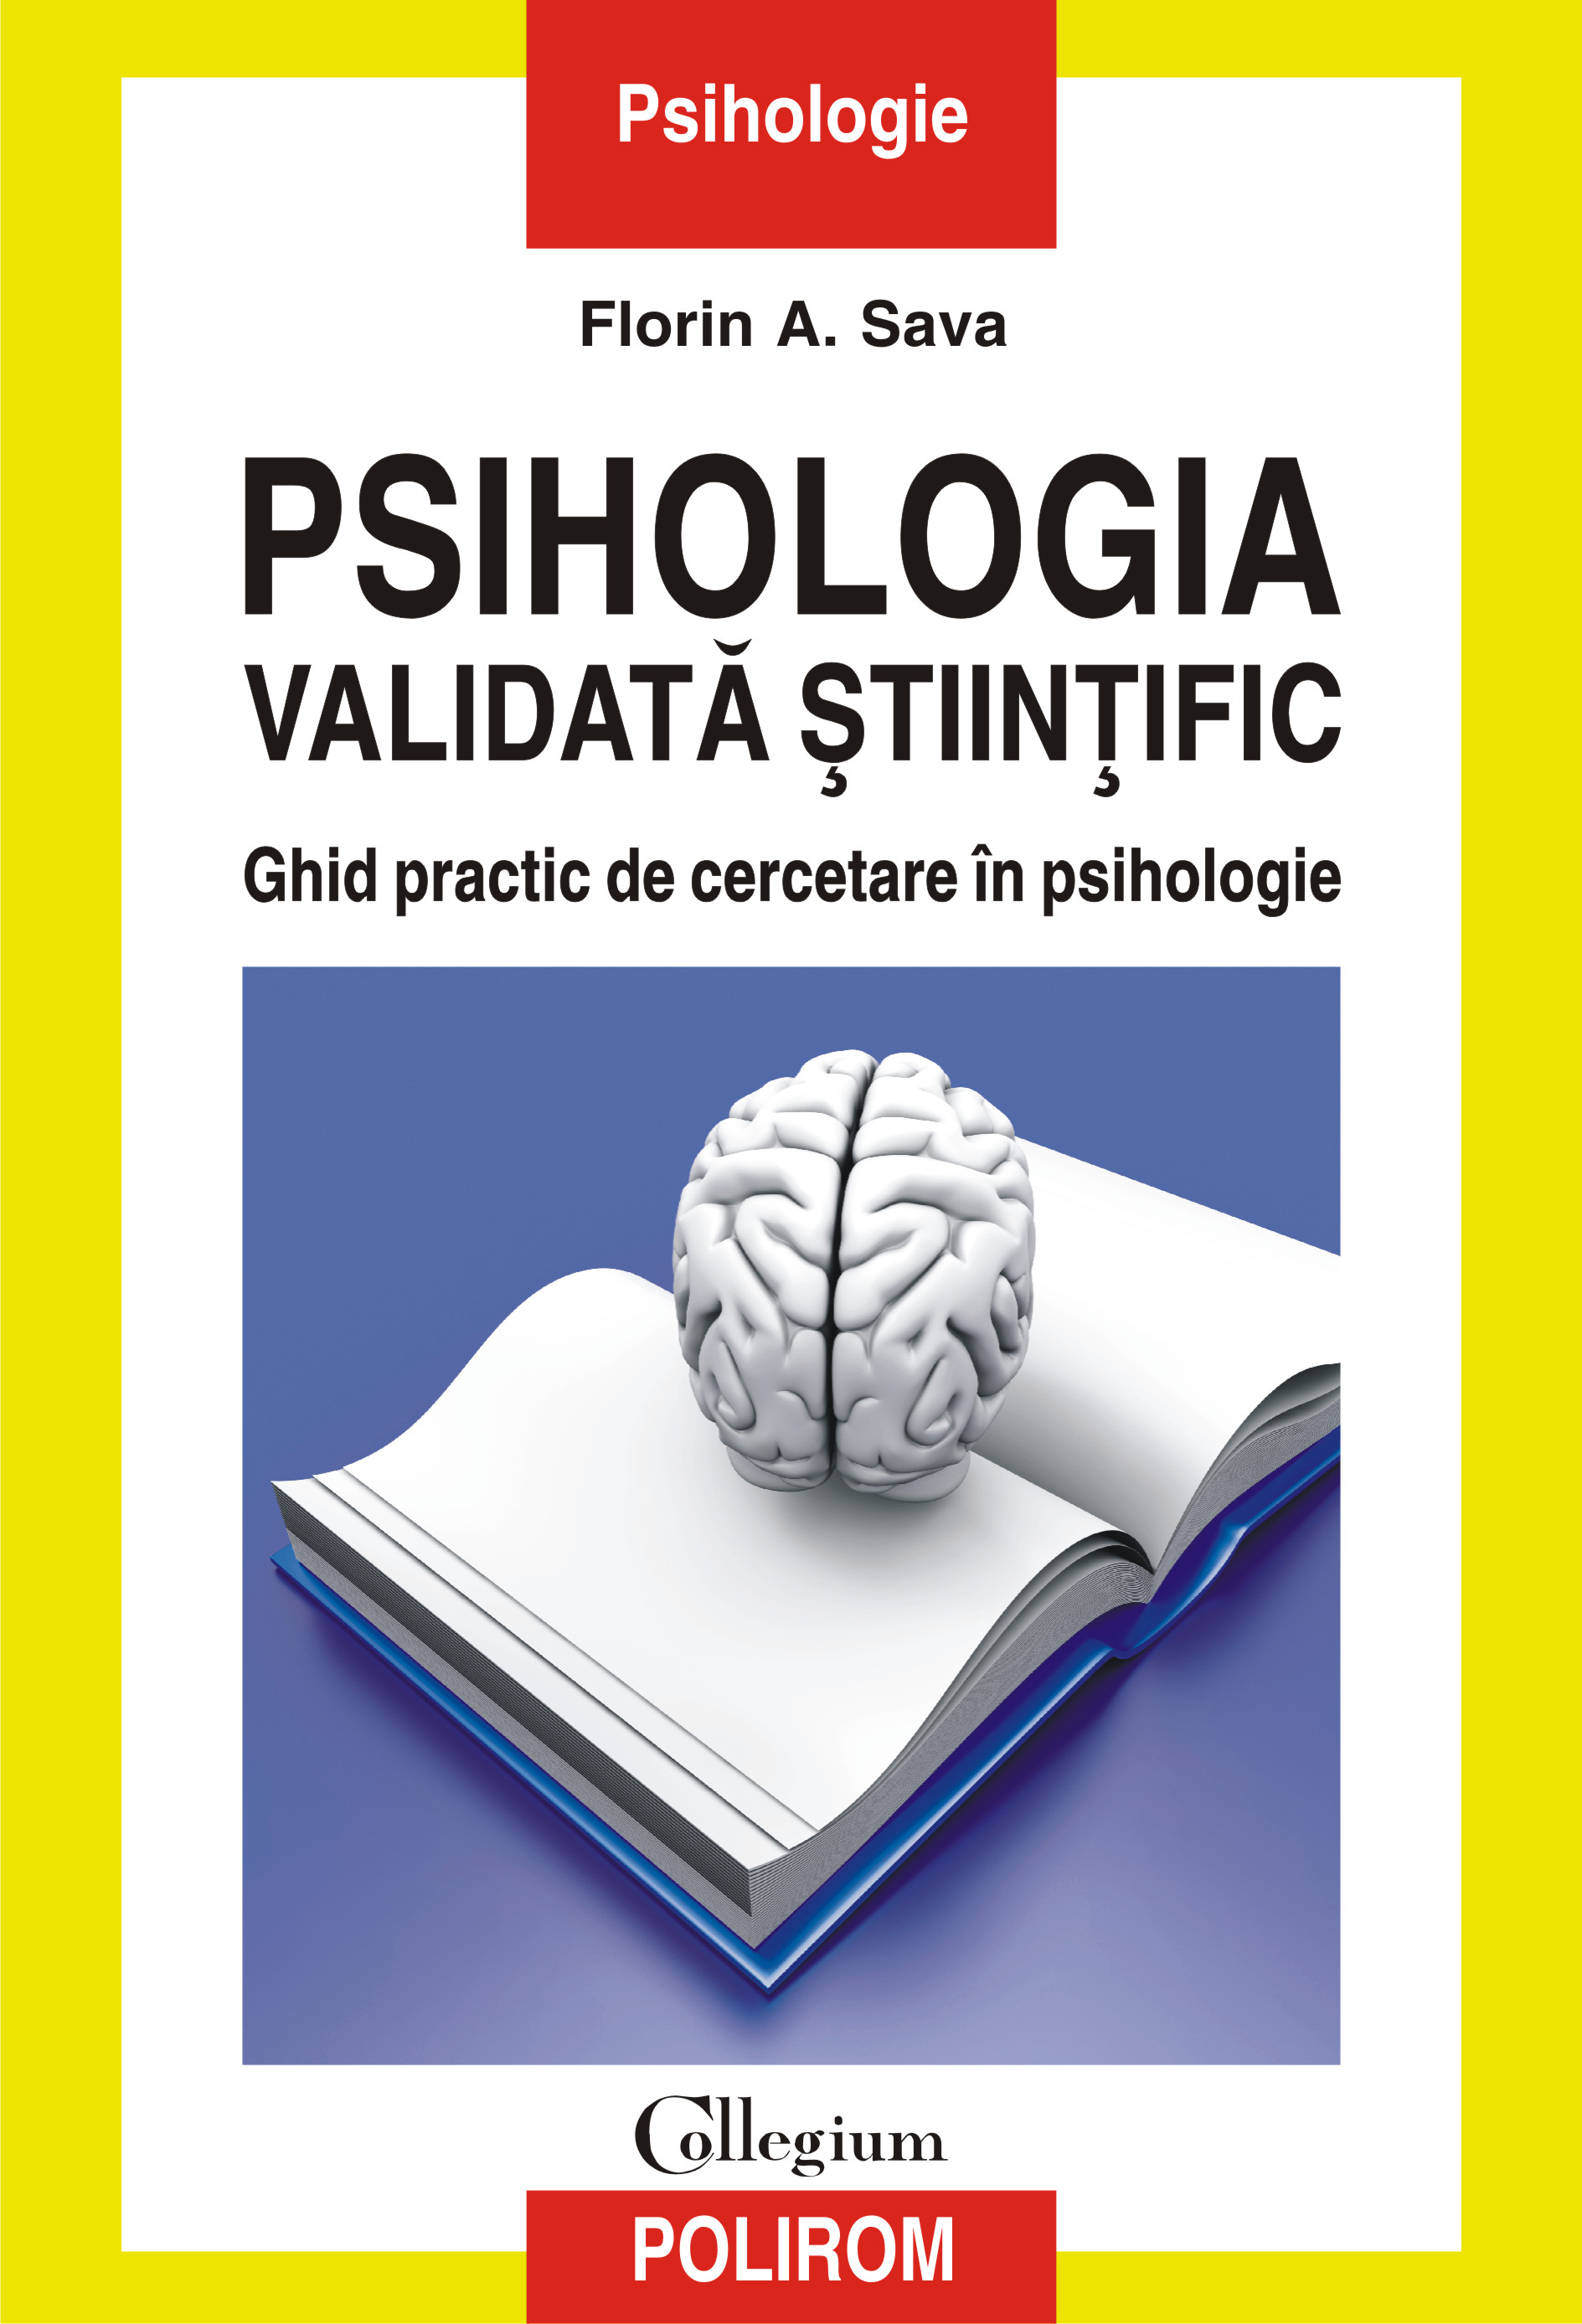 eBook Psihologia validata stiintific - Florin A. Sava